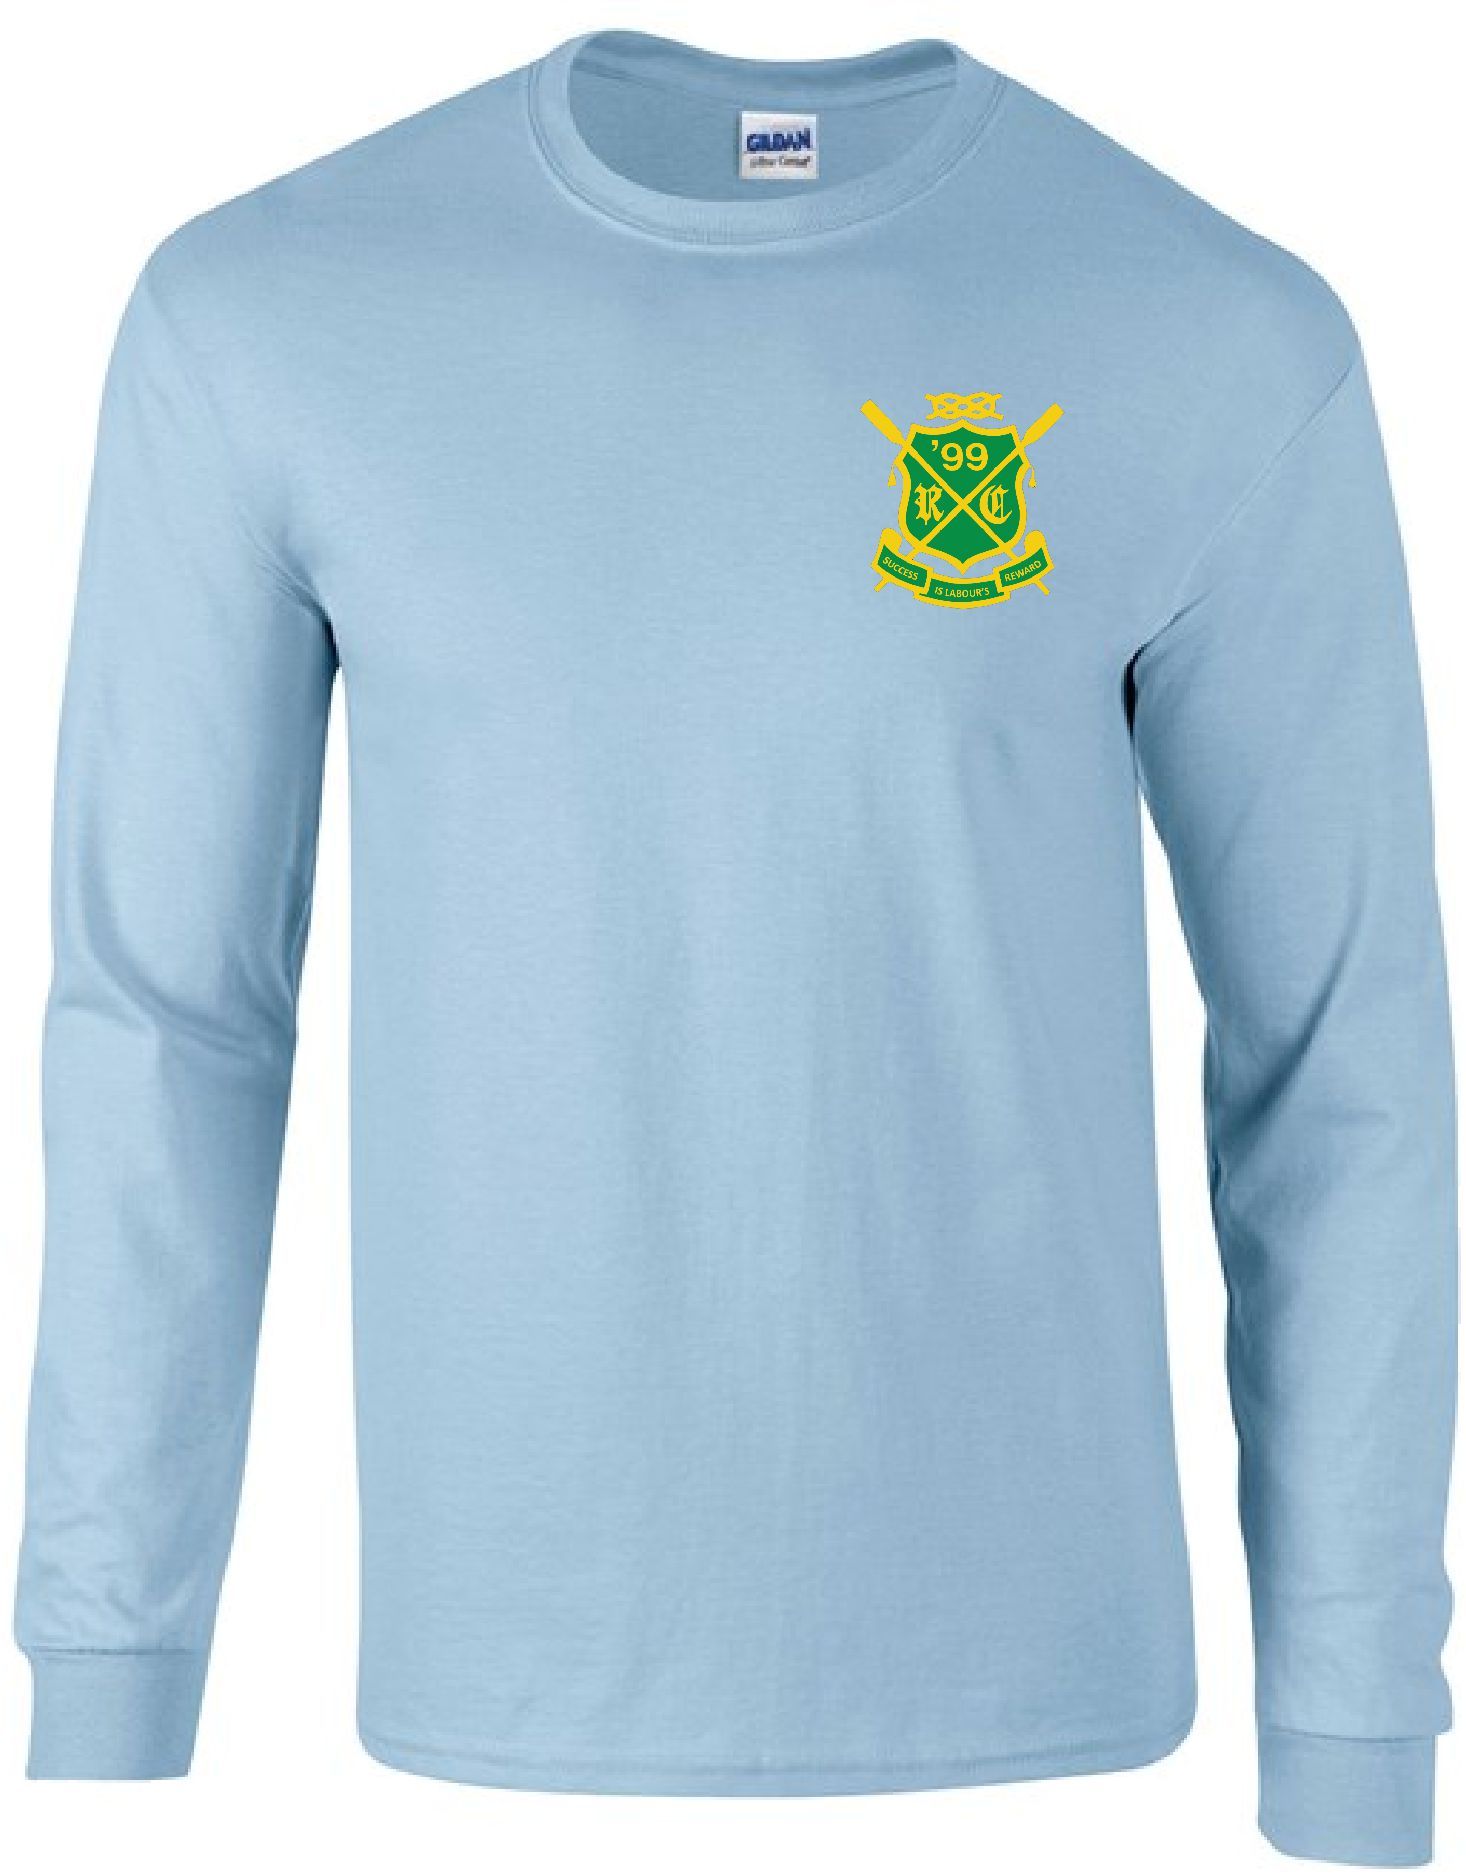 Cambridge 99 Rowing Club Long Sleeve T-shirt